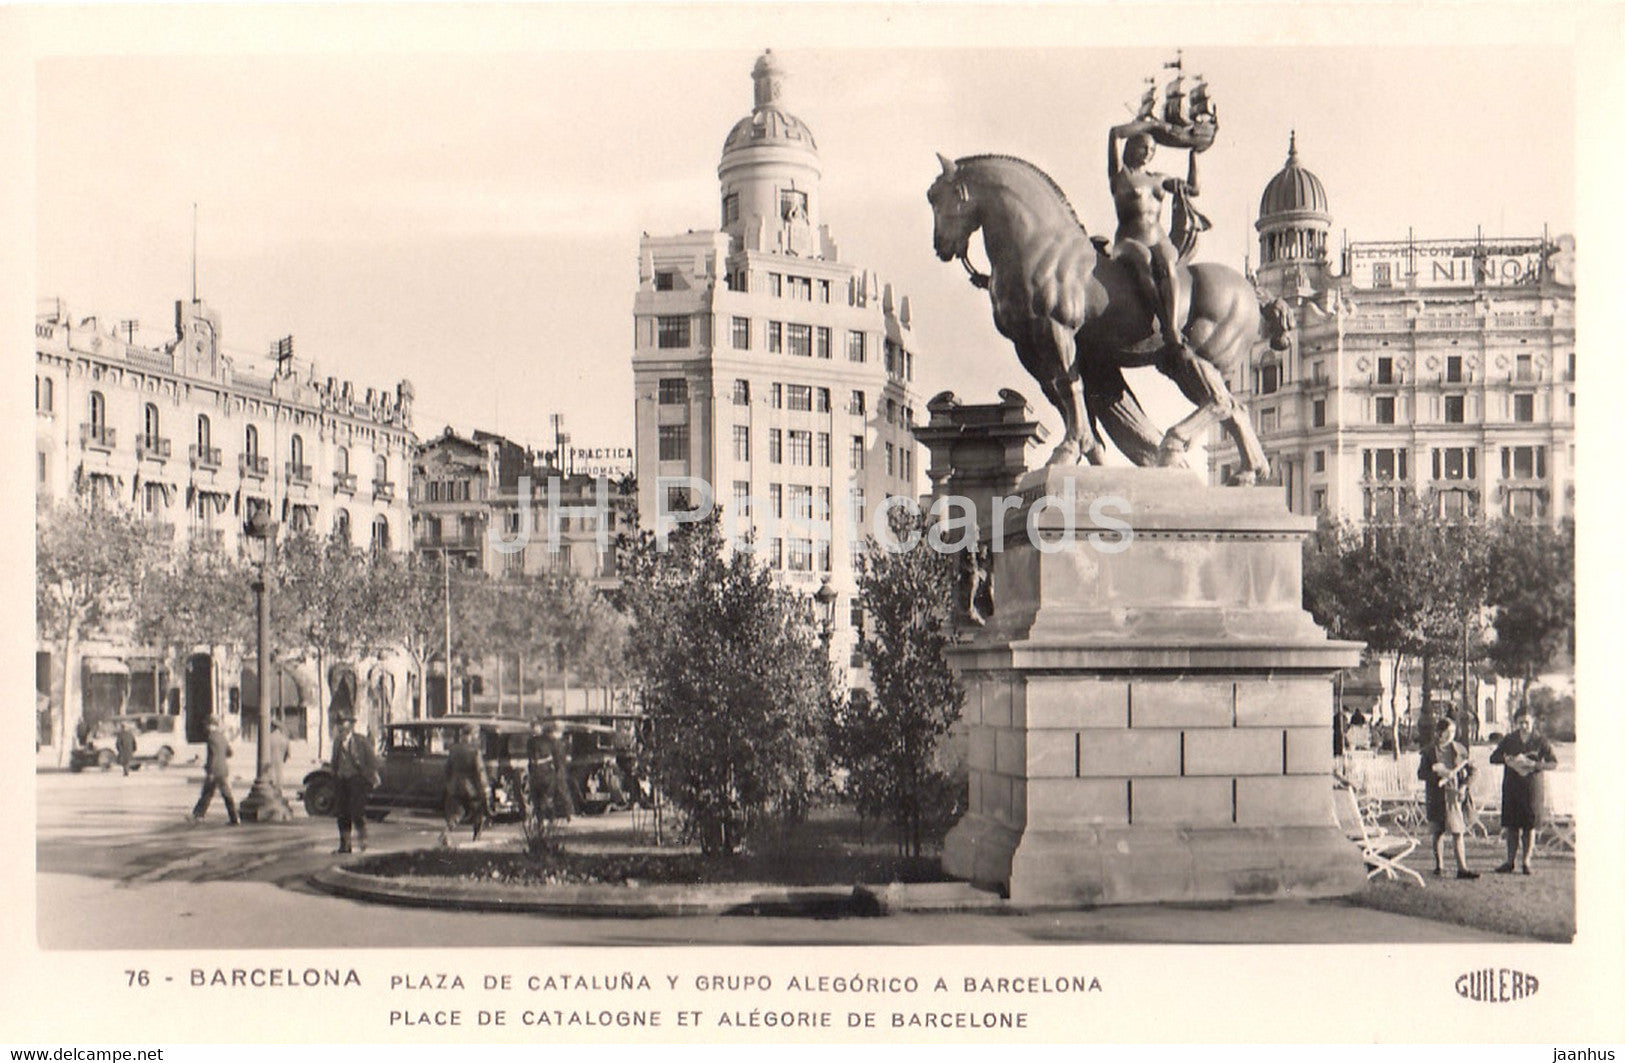 Barcelona - Plaza de Cataluna y Grupo Alegorico a Barcelona - monument - horse - old postcard - Spain - unused - JH Postcards